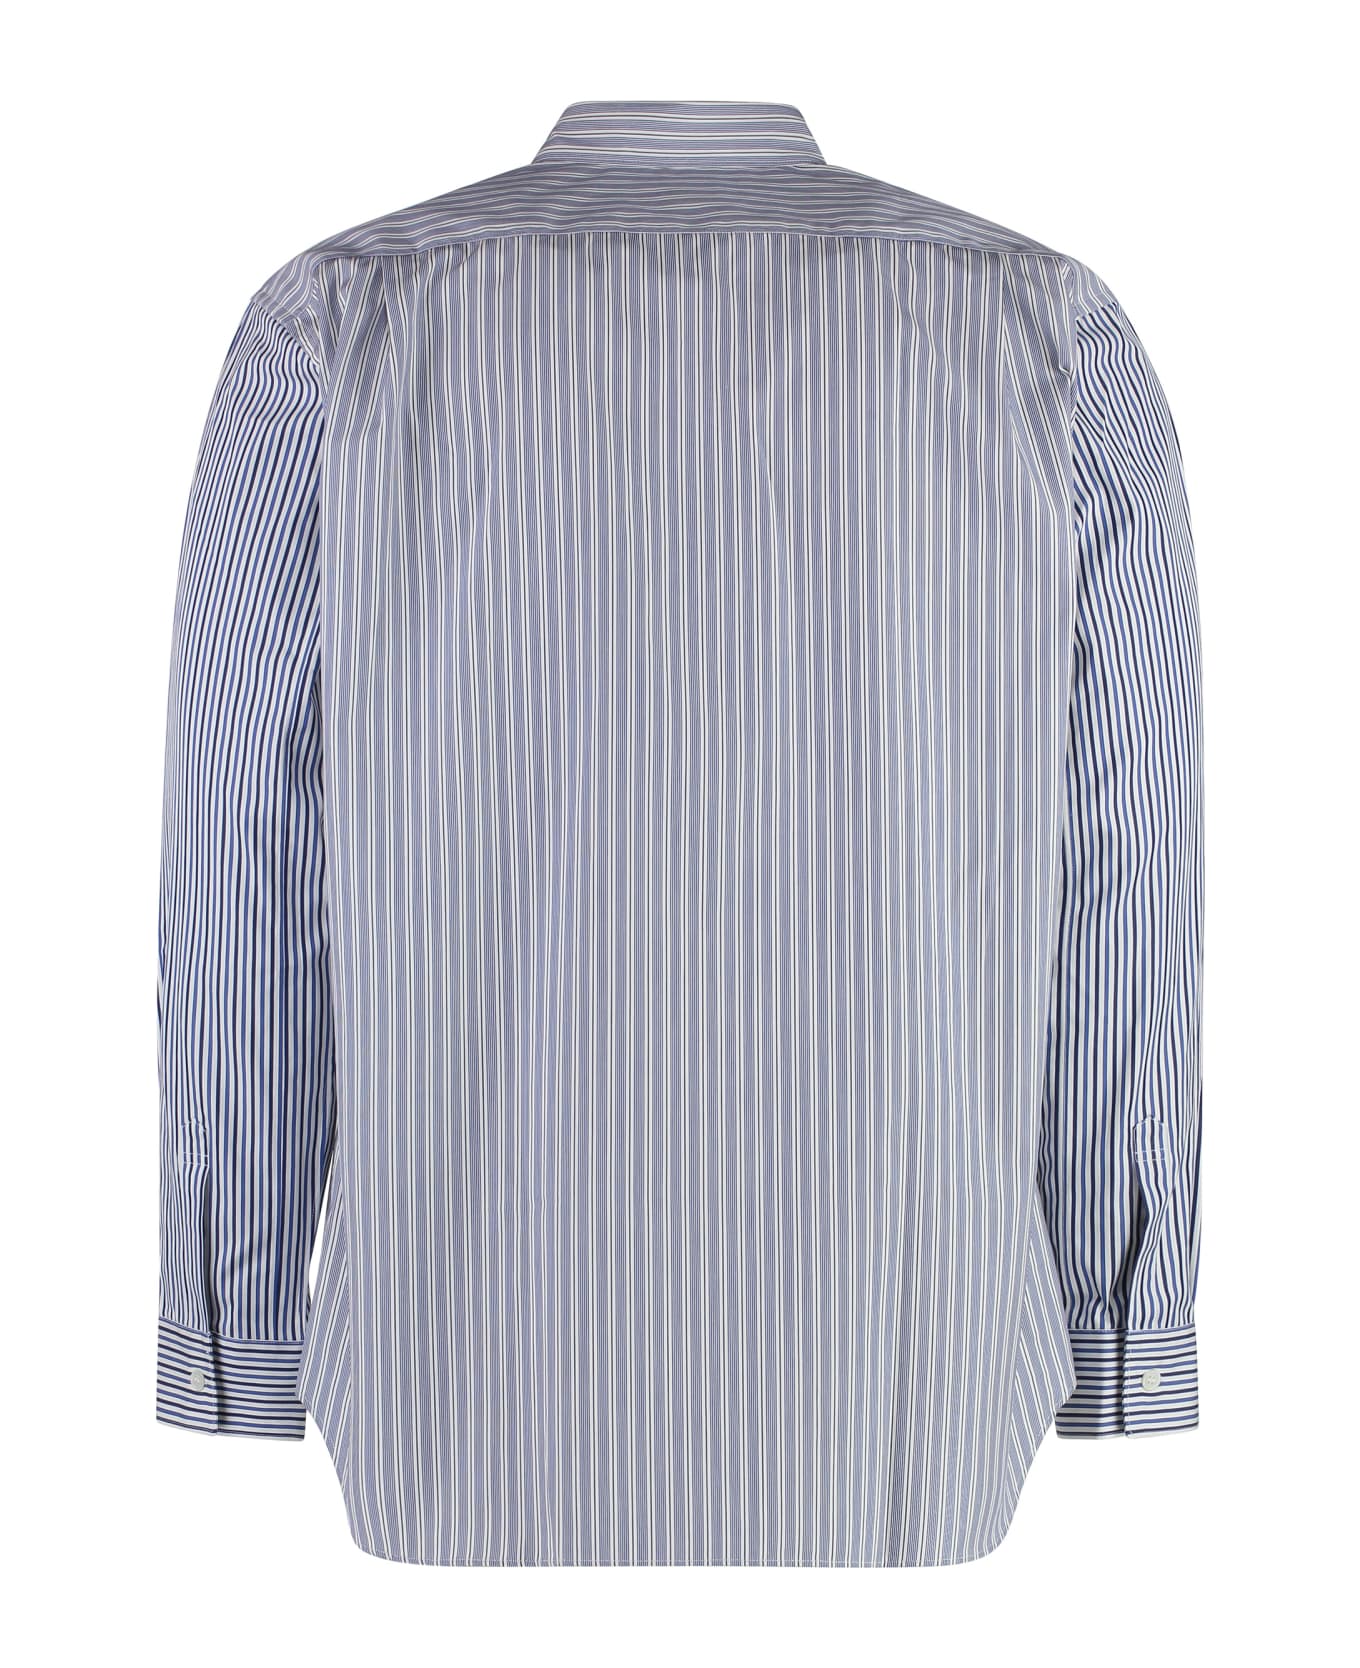 Comme des Garçons Shirt Striped Cotton Shirt - blue